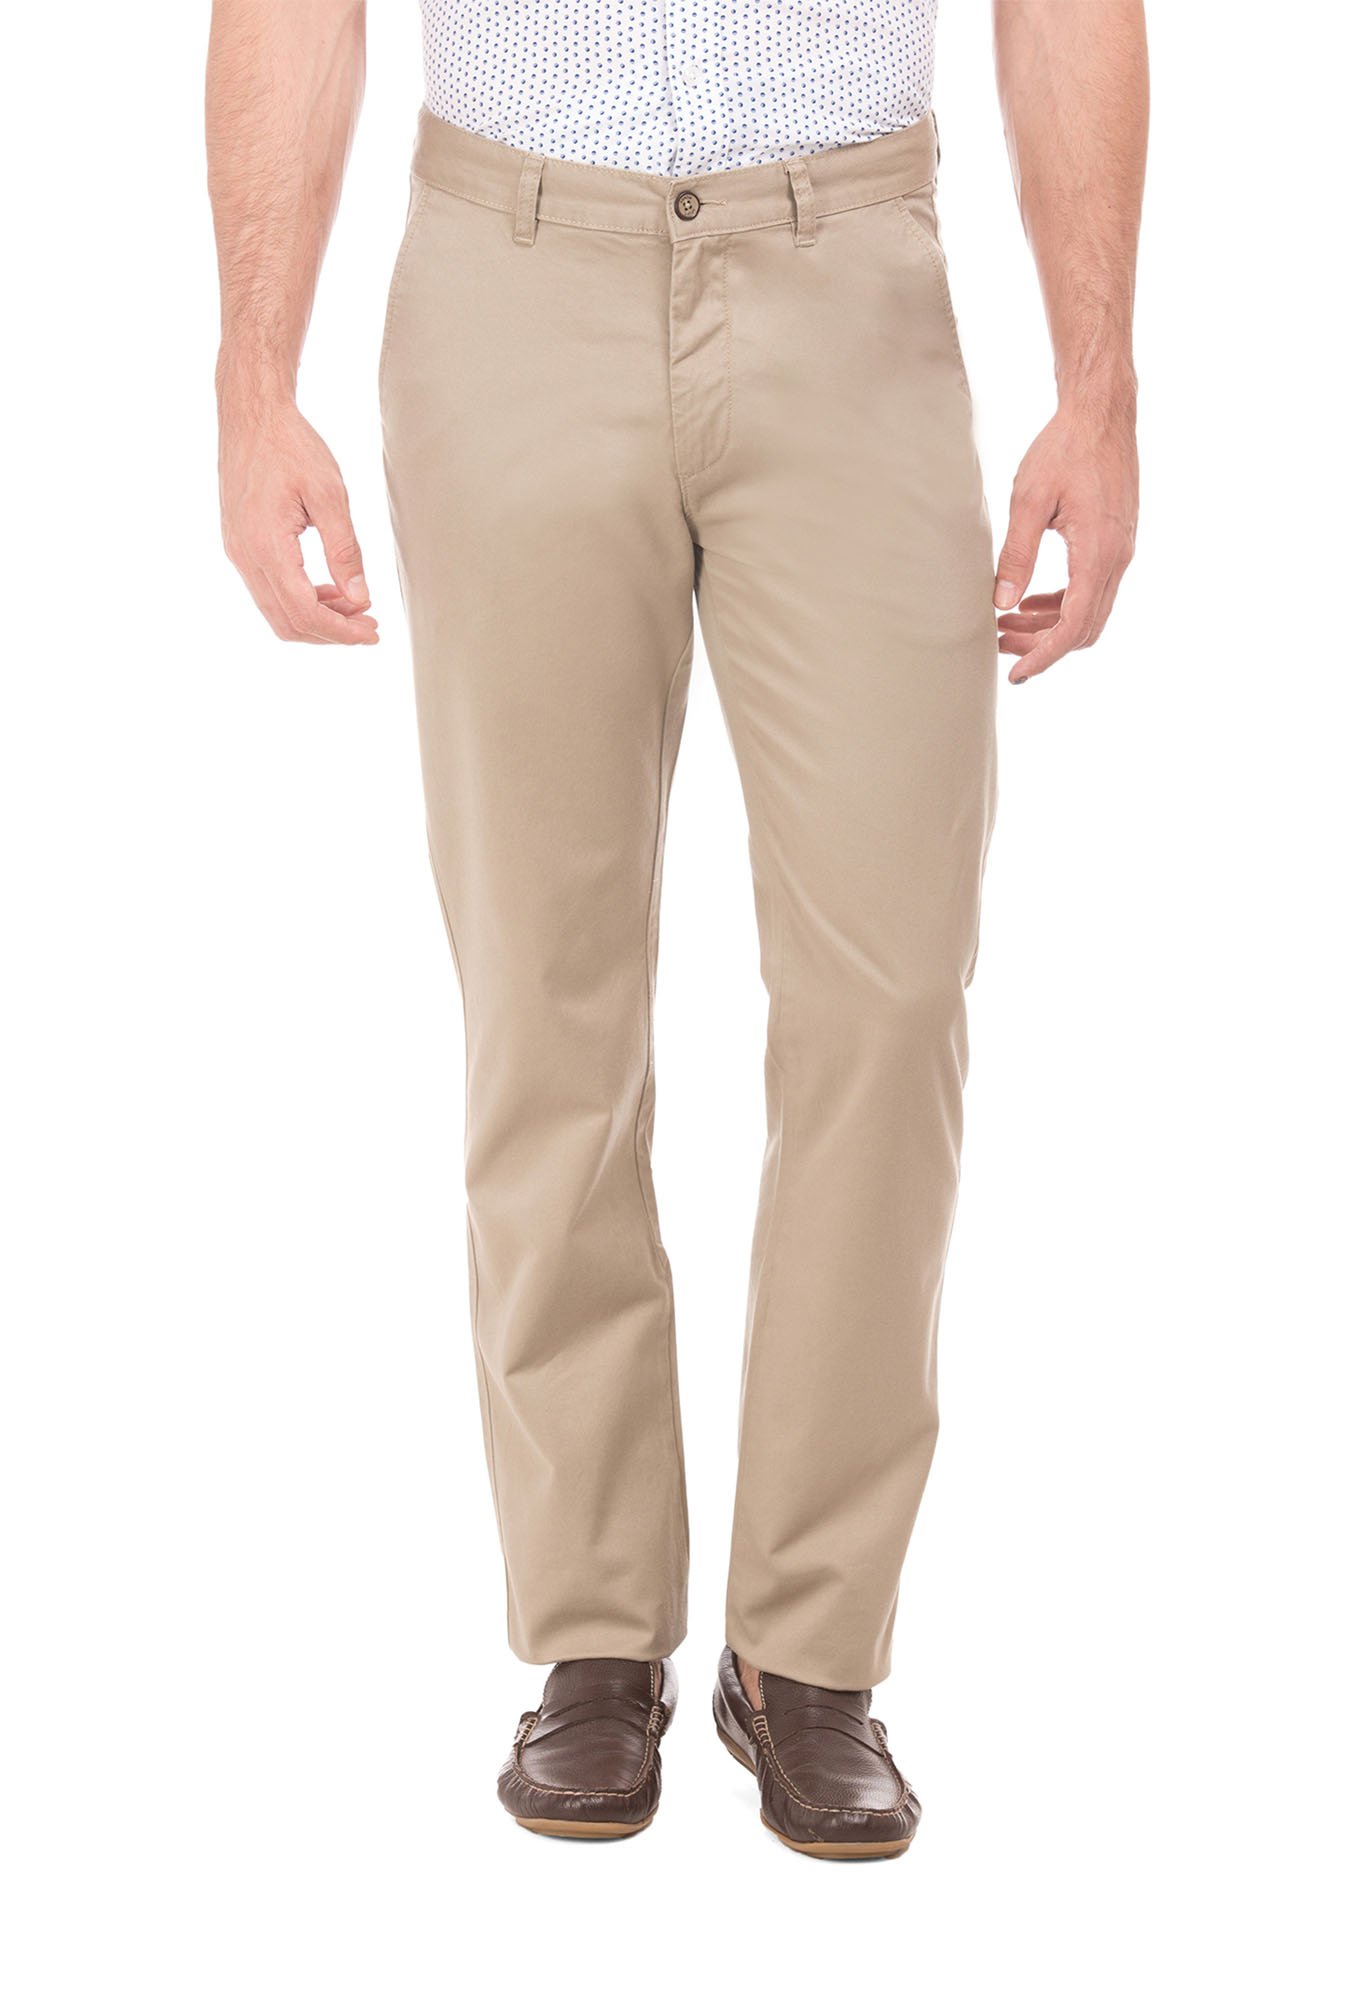 Buy Arrow Olive Cotton Trousers for Men Online  Tata CLiQ